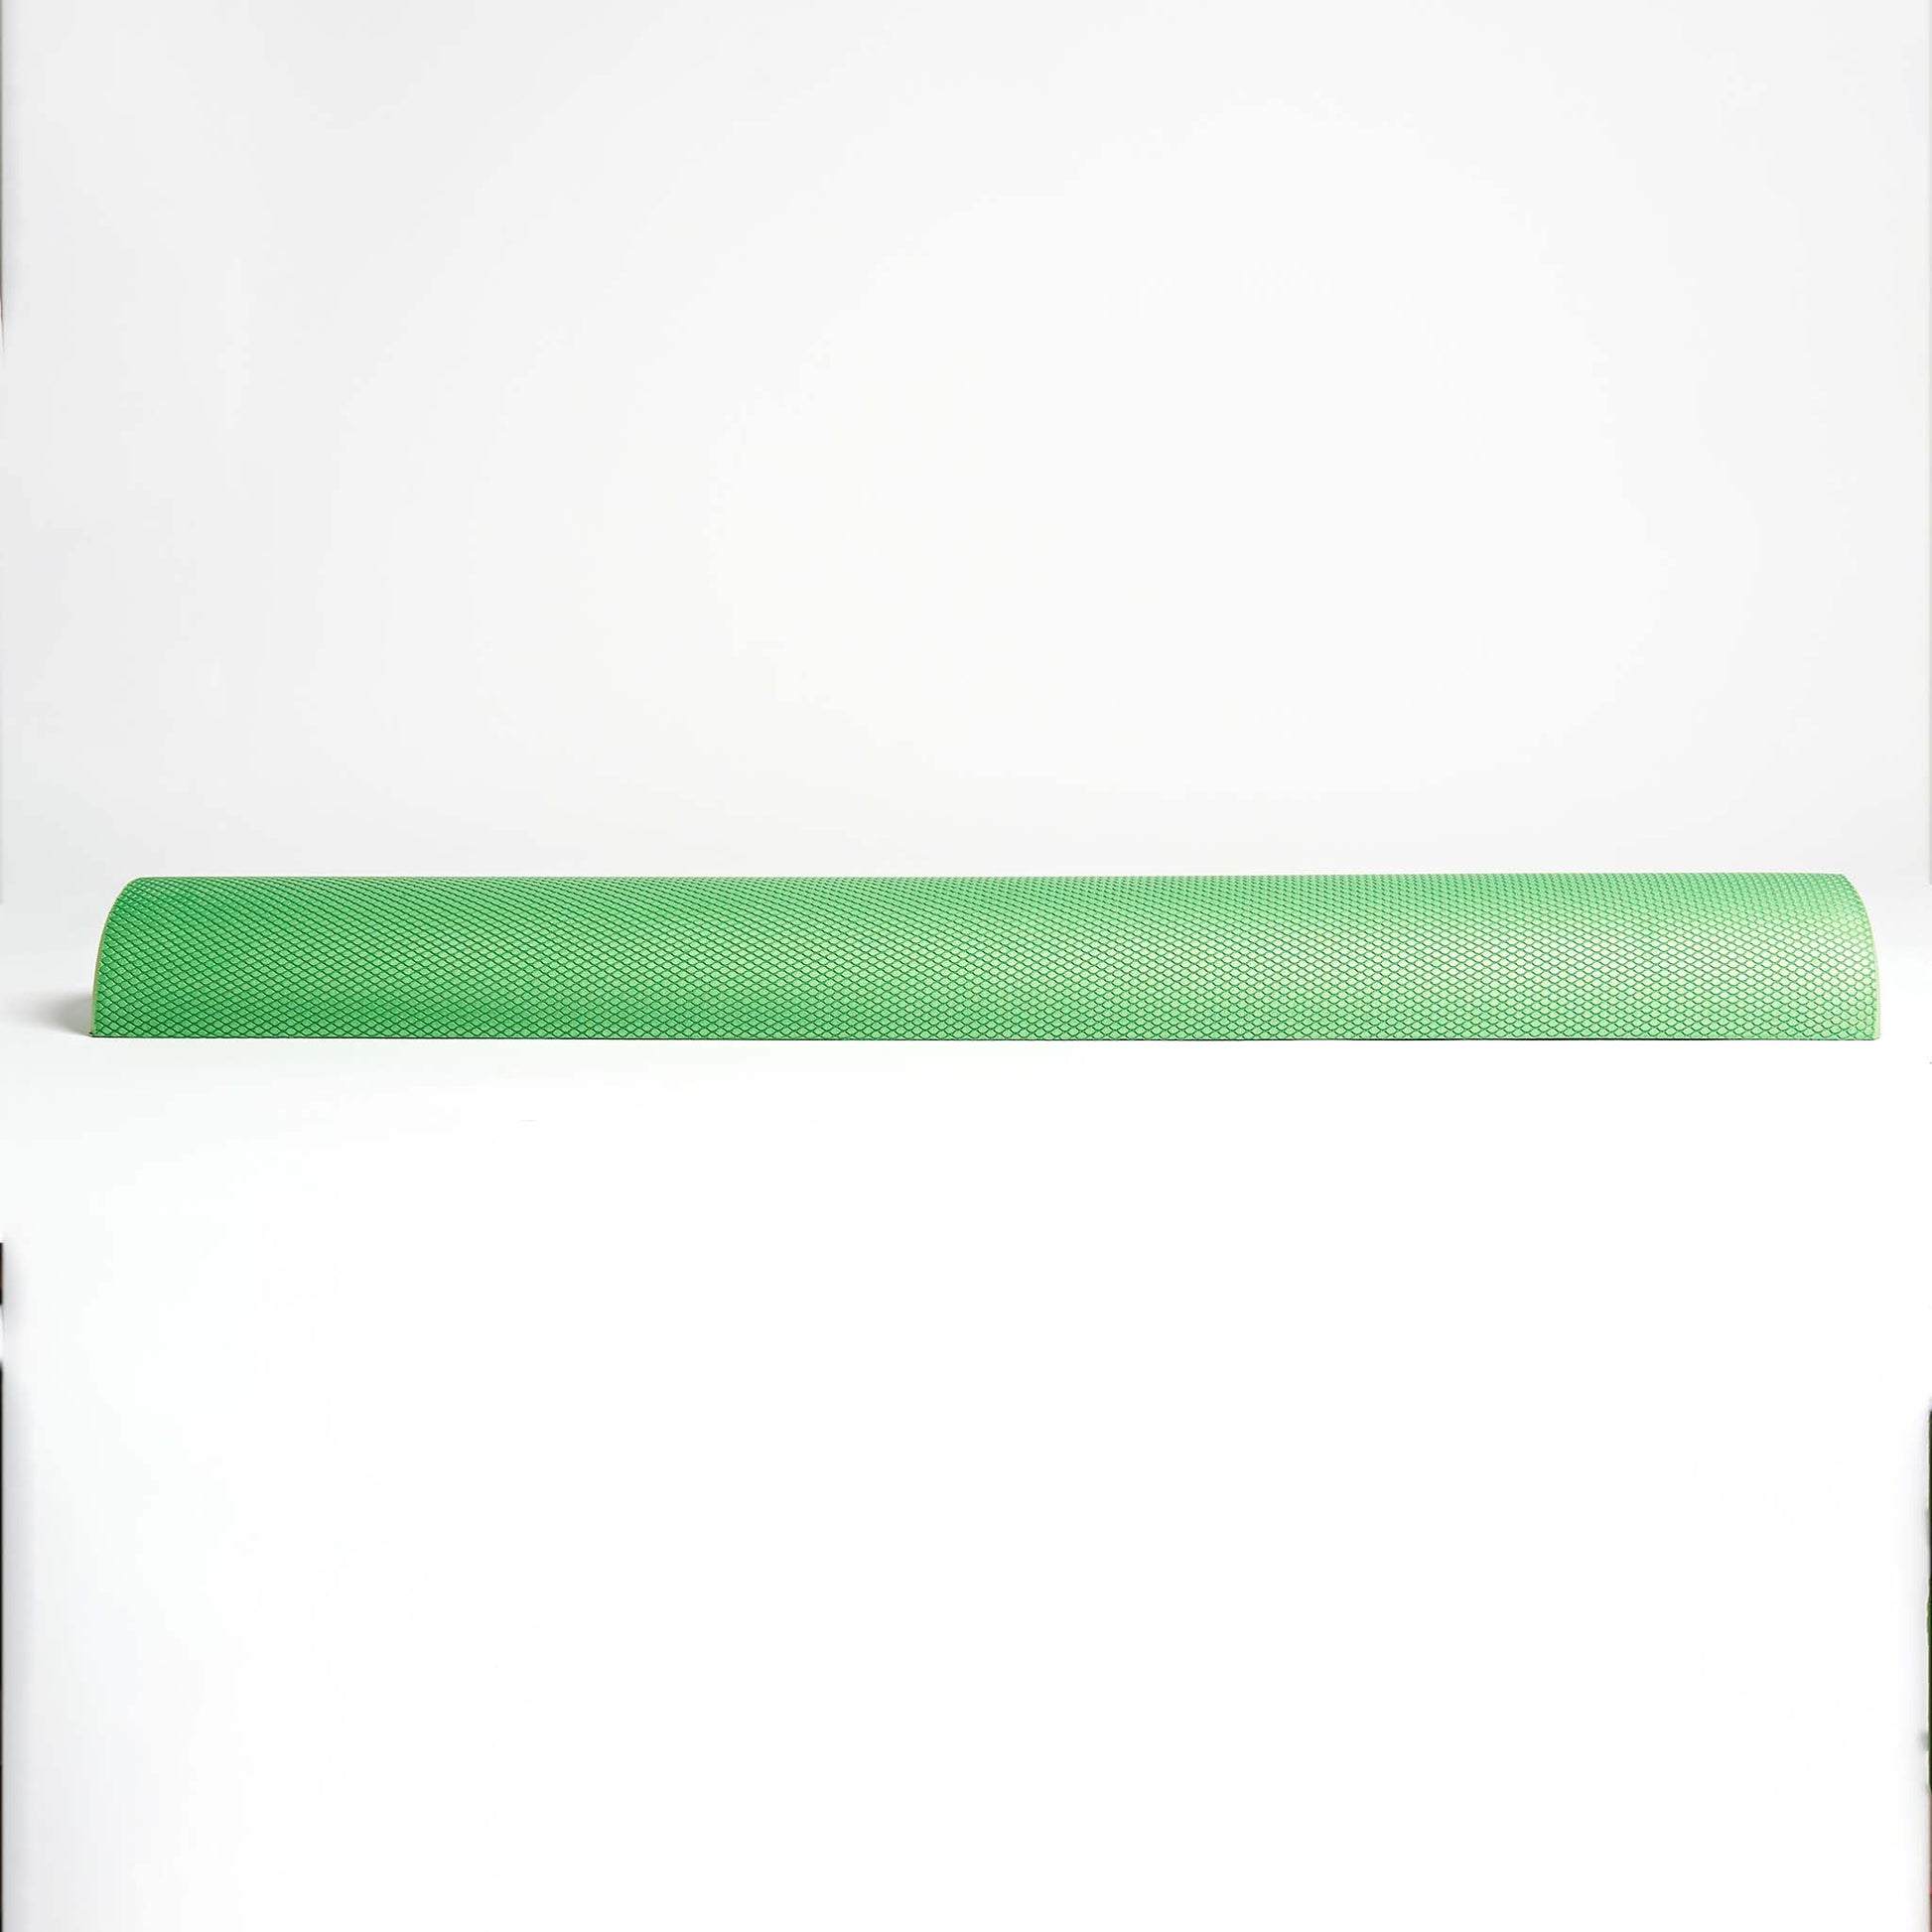 EcoWise Hexangular Texture Foam Roller – Aeromat/Ecowise